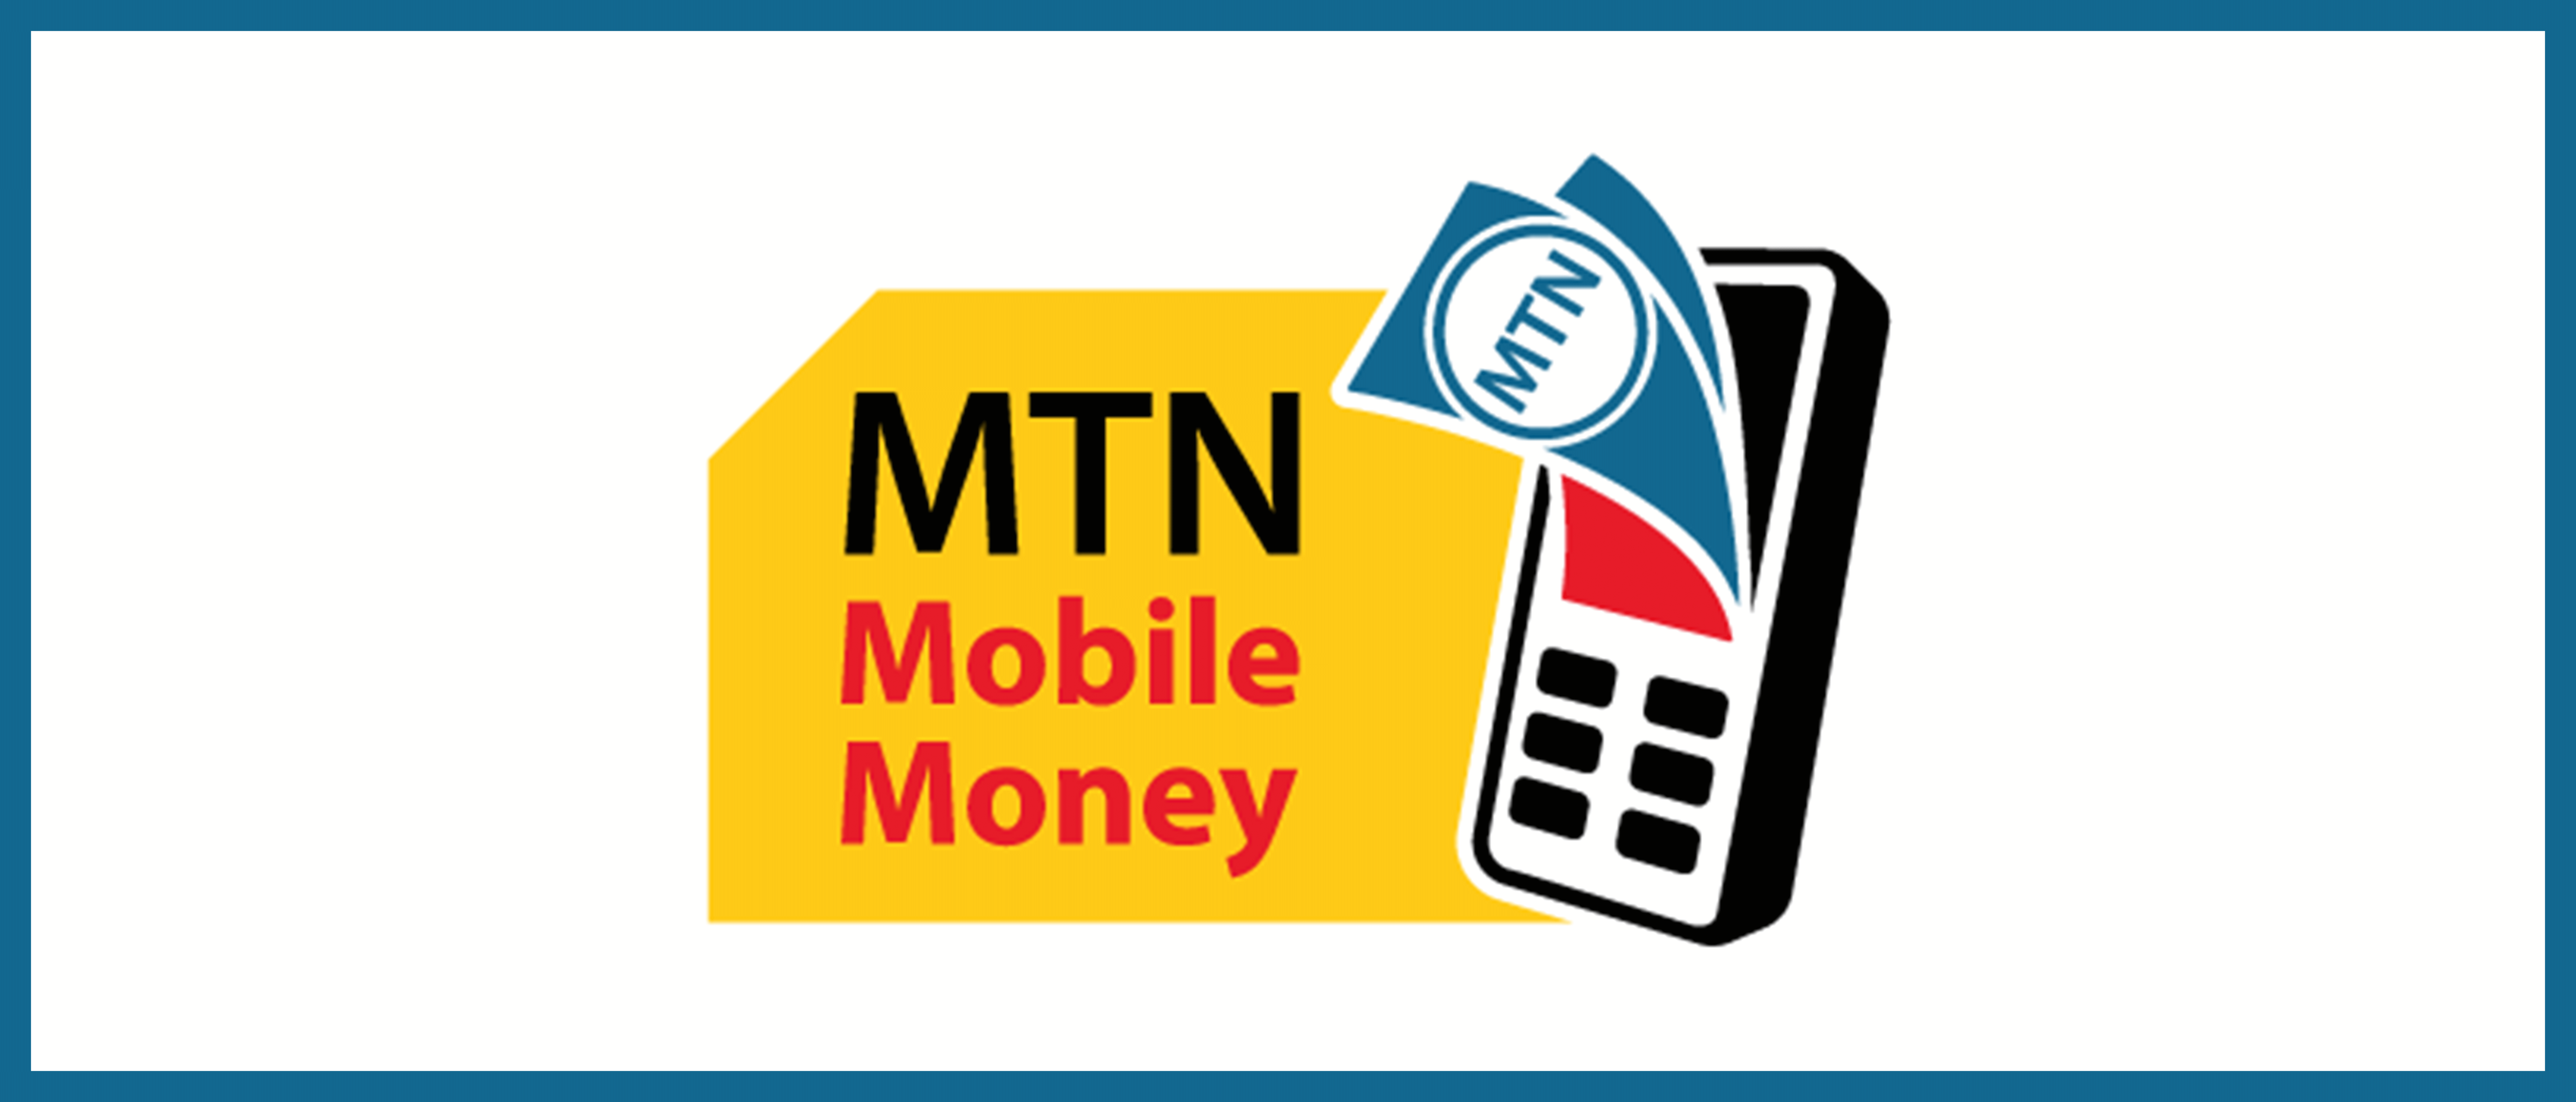 Mobile banking in Uganda | MTN Mobile Money